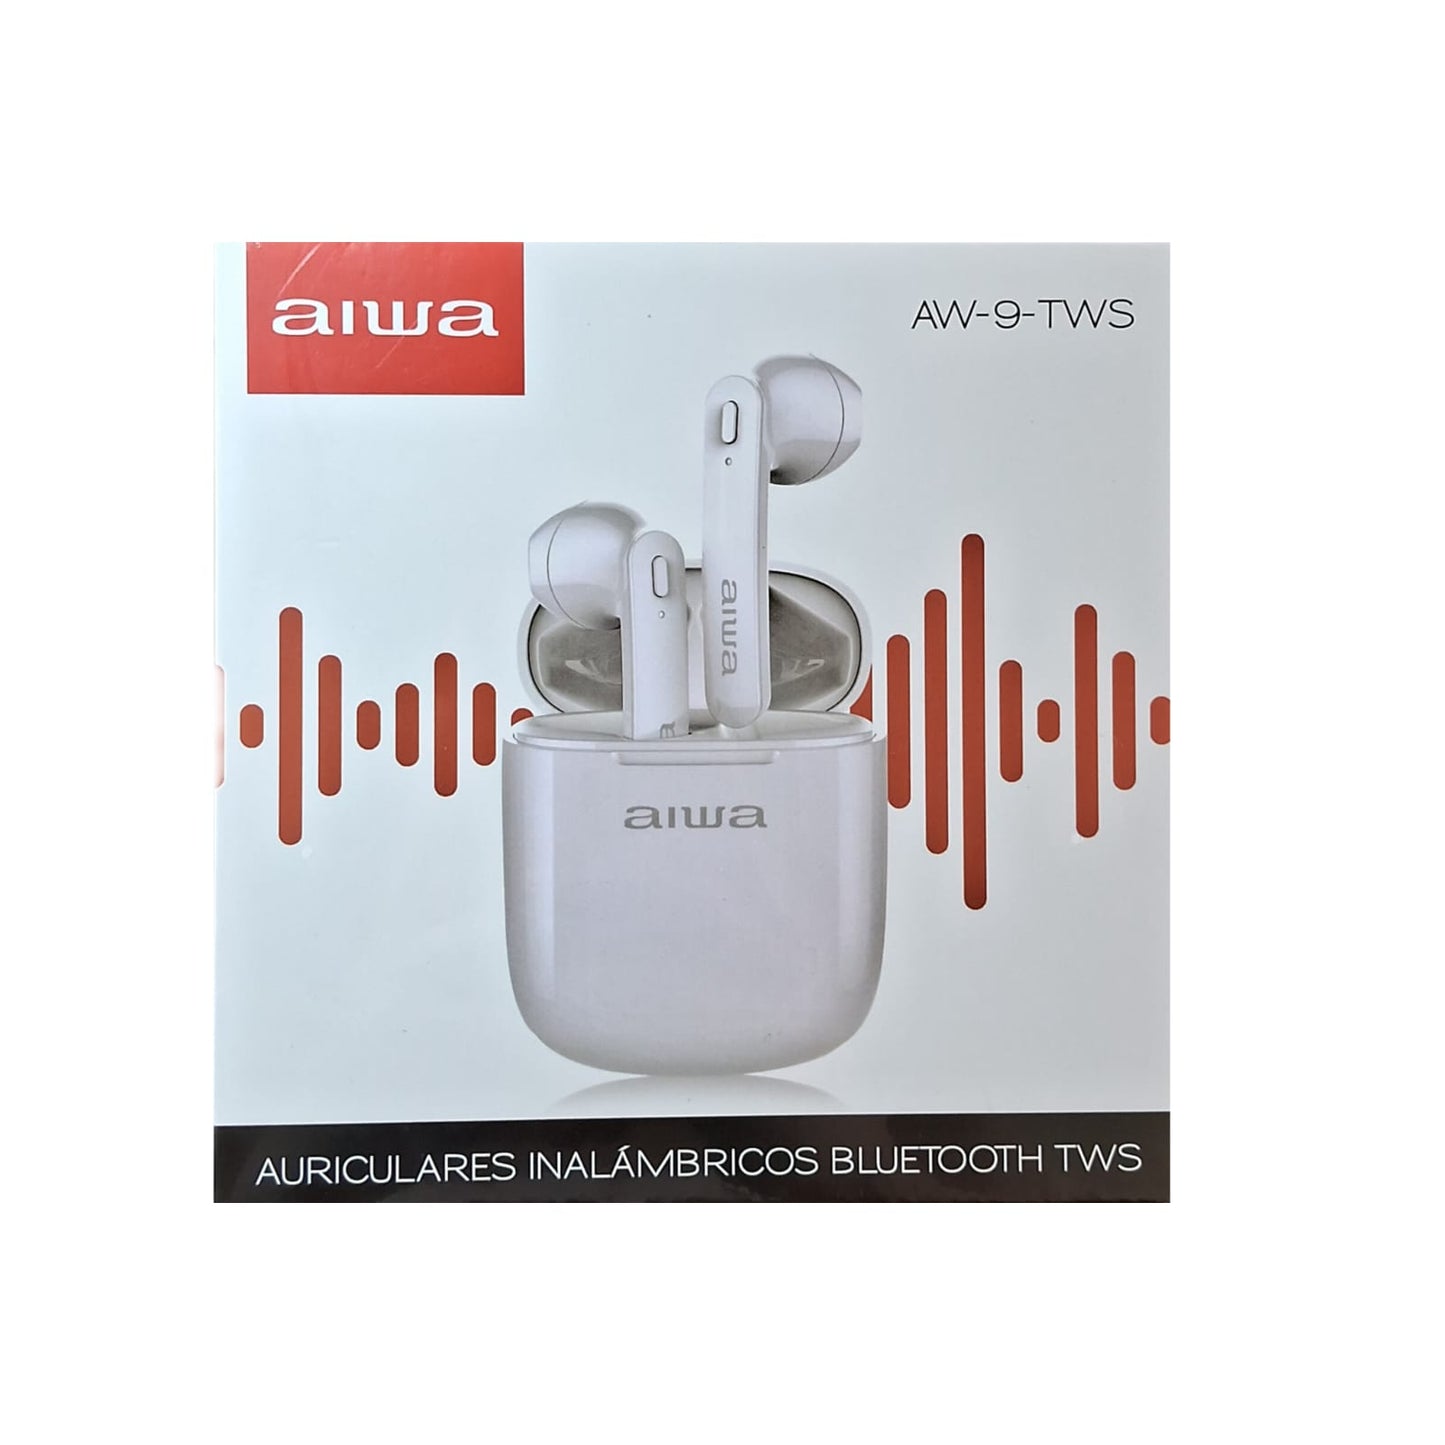 Audifonos Aiwa Inalambricos Bluetooth Aw-9-tws